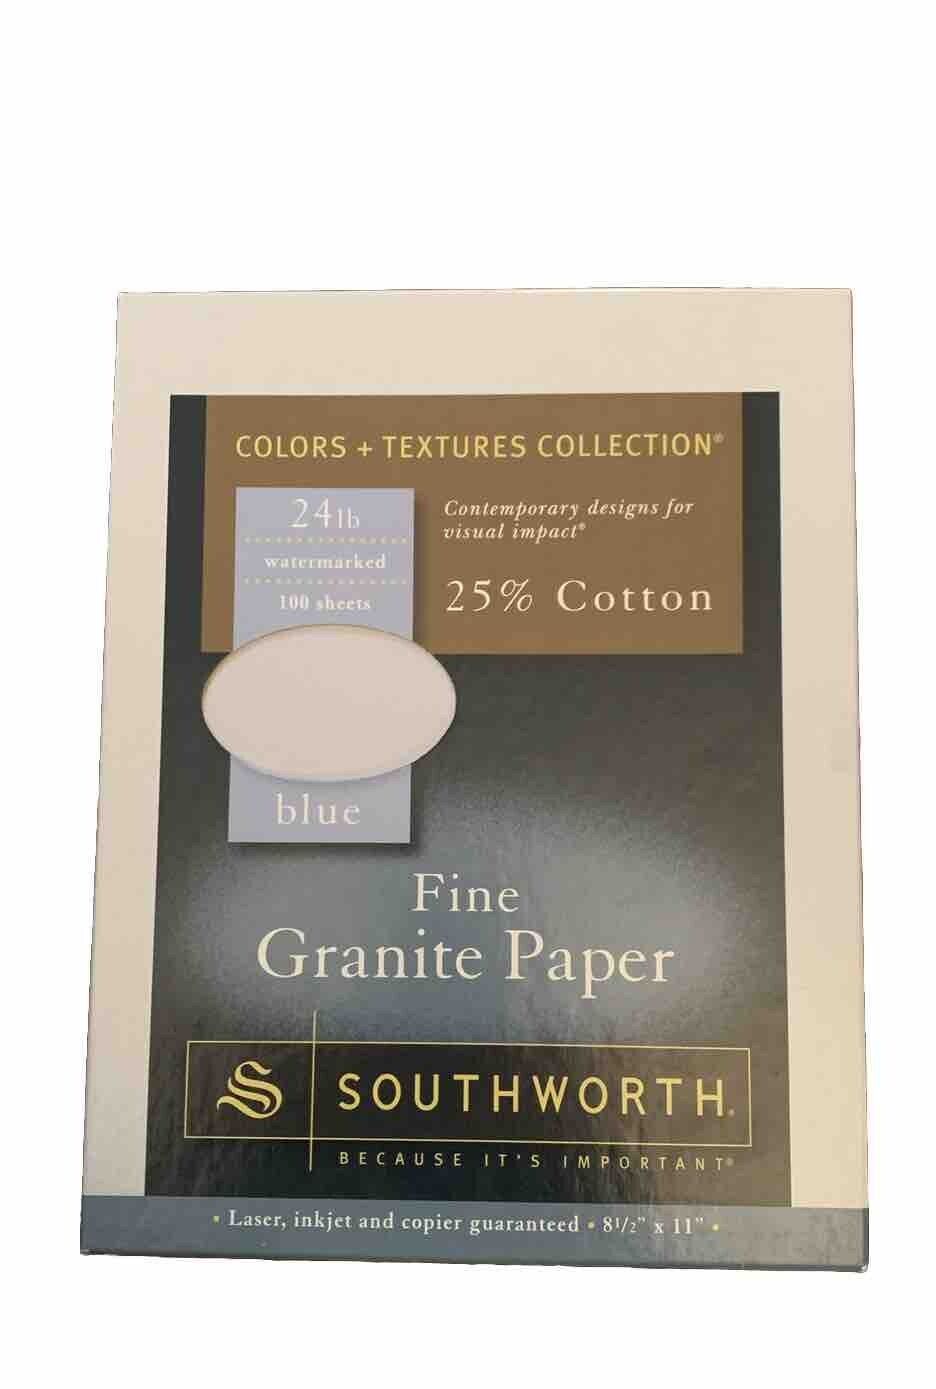 Southworth Colors + Textures Collection Fine Granite Paper Gray. New Open Box.